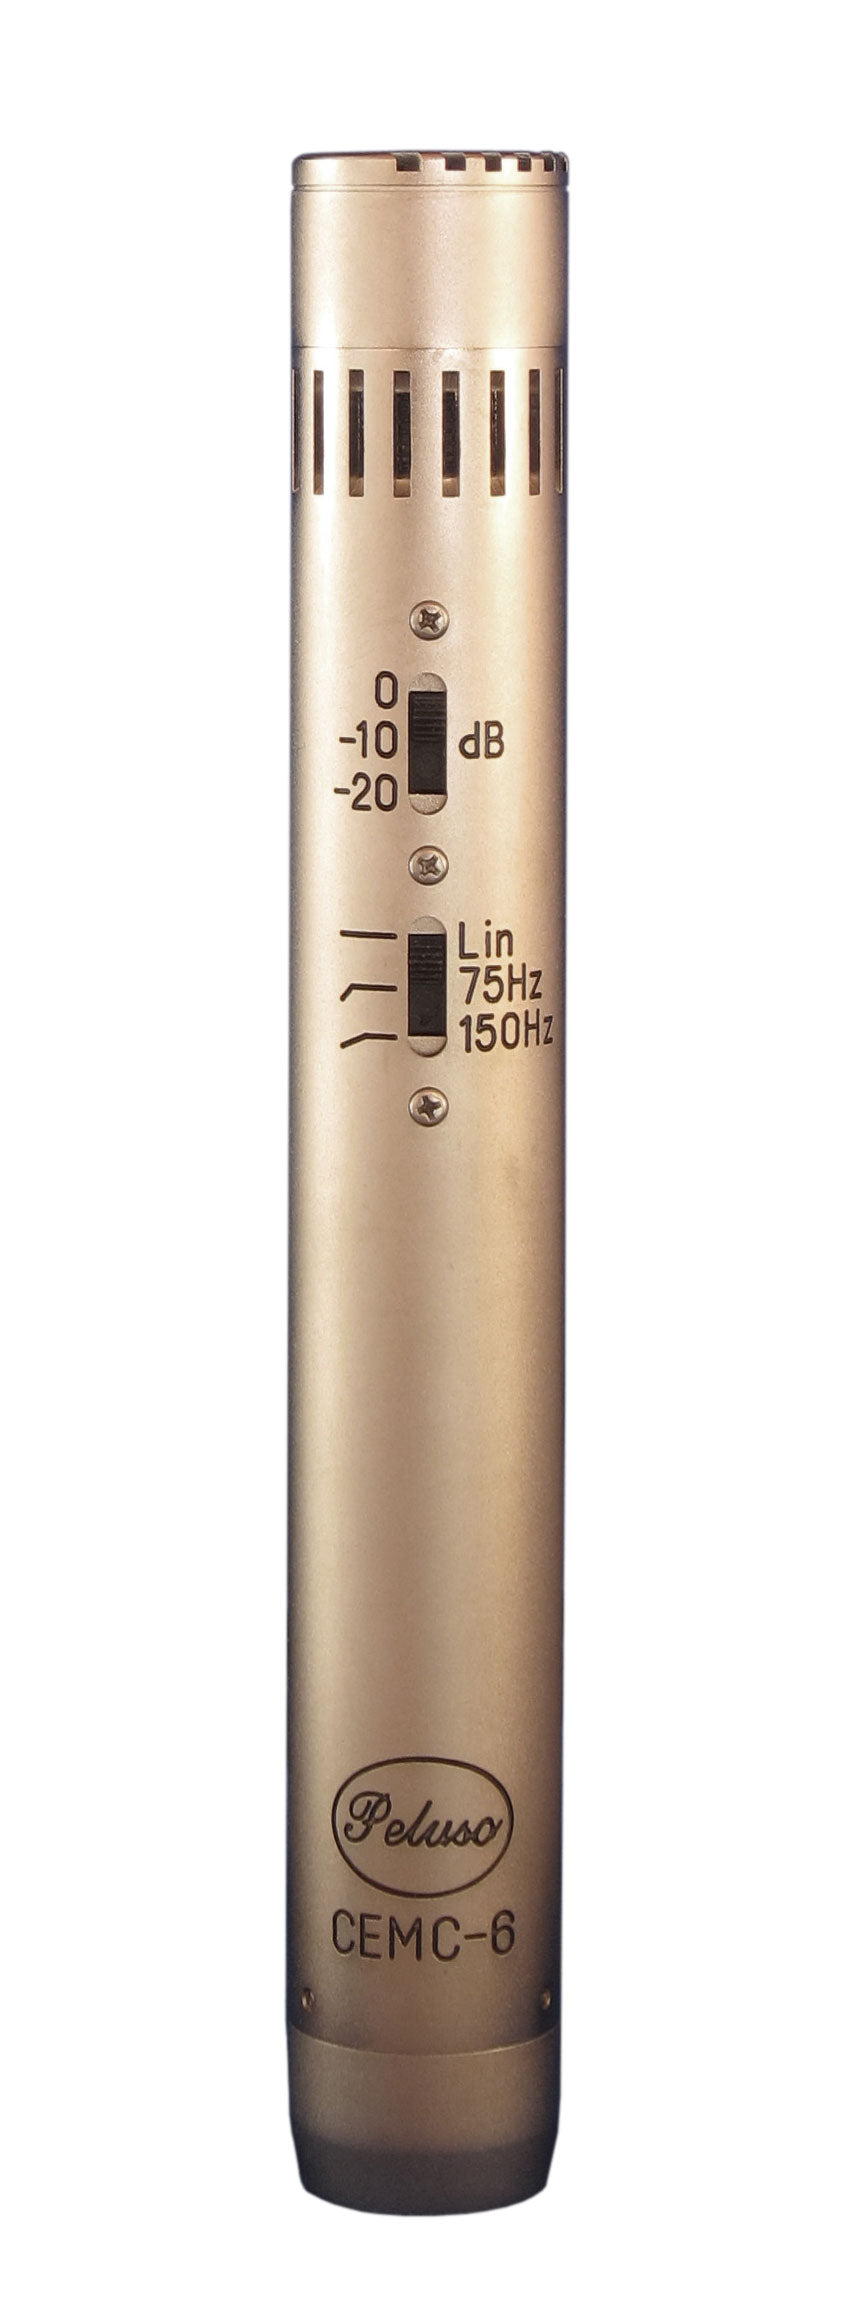 Peluso CEMC6 Solid State Small Diaphragm Condenser Microphone